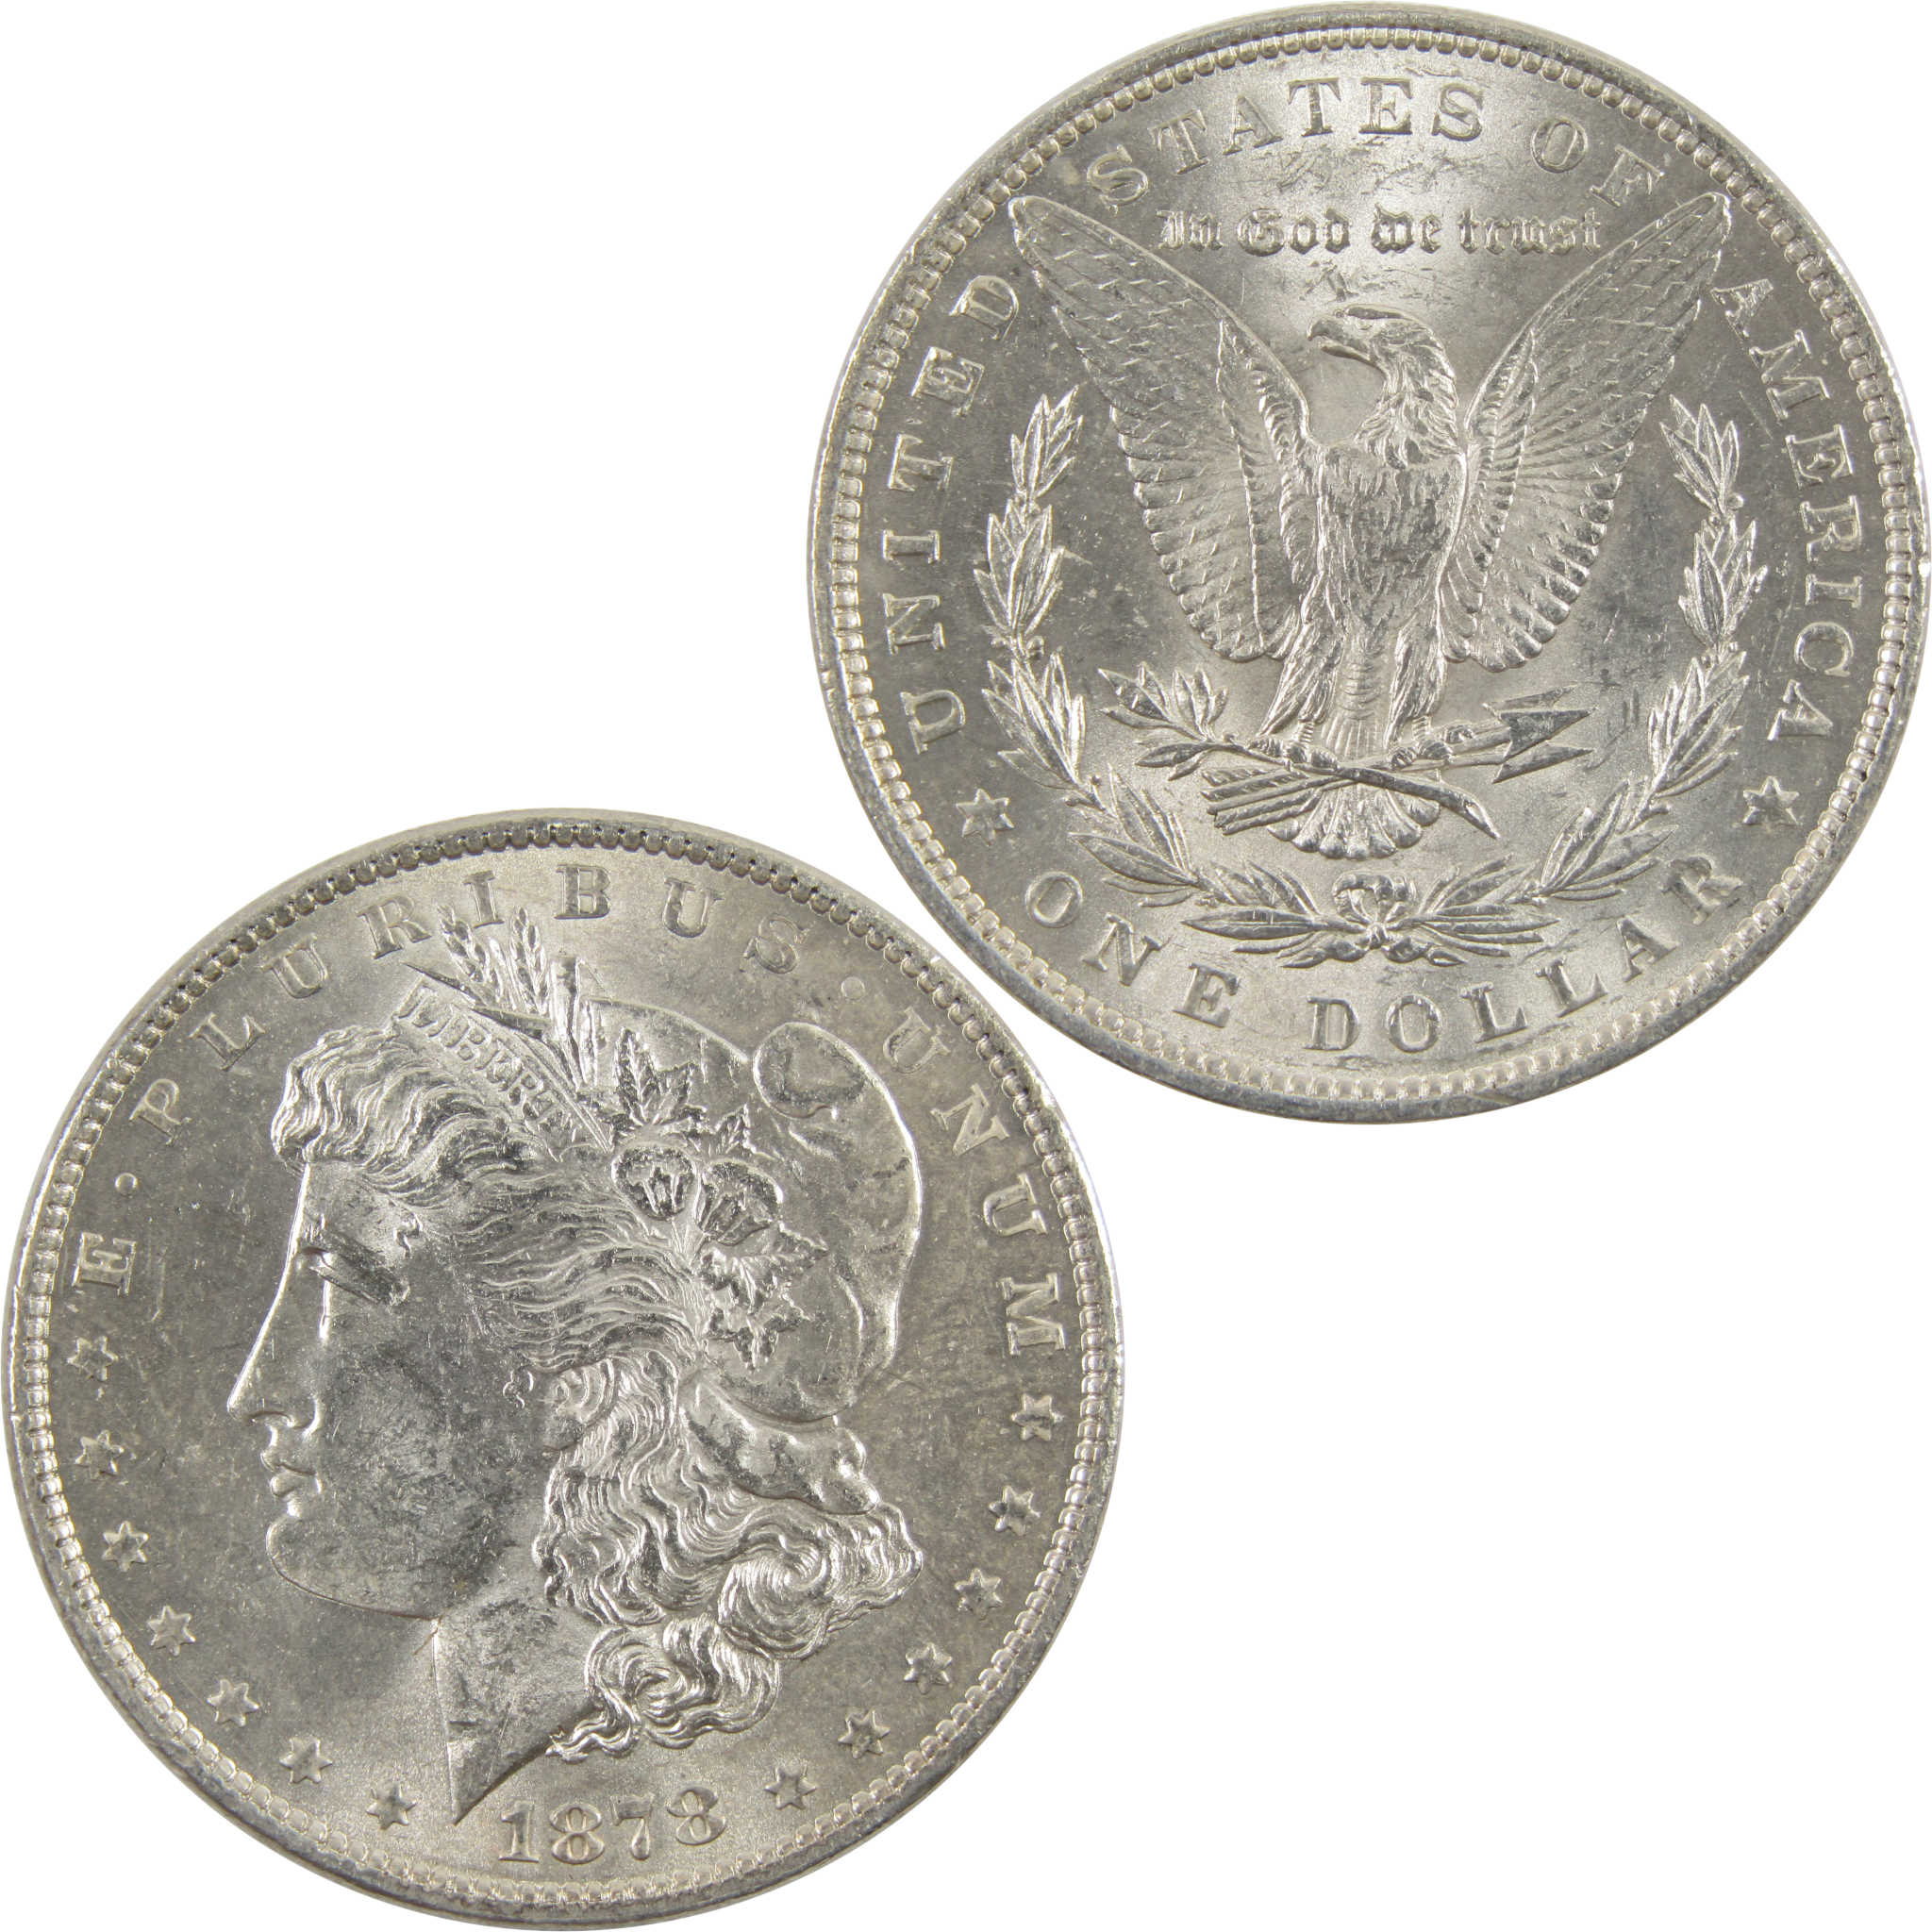 1878 7TF Rev 79 Morgan Dollar Borderline Uncirculated SKU:I11140 - Morgan coin - Morgan silver dollar - Morgan silver dollar for sale - Profile Coins &amp; Collectibles